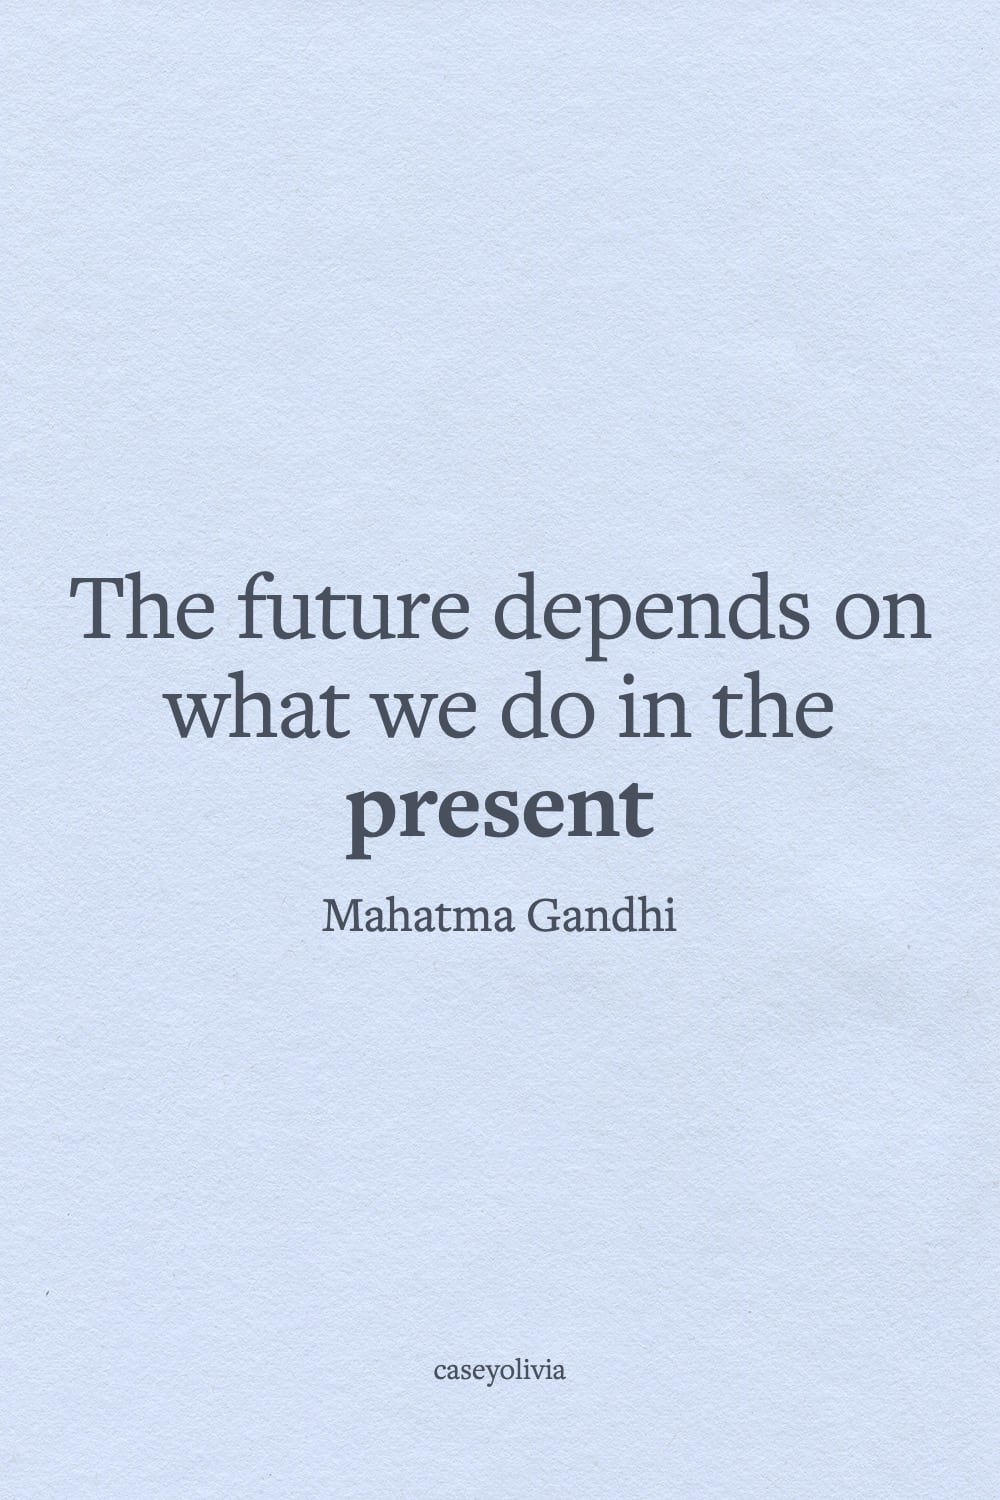 mahatma gandhi future depends on the present quote